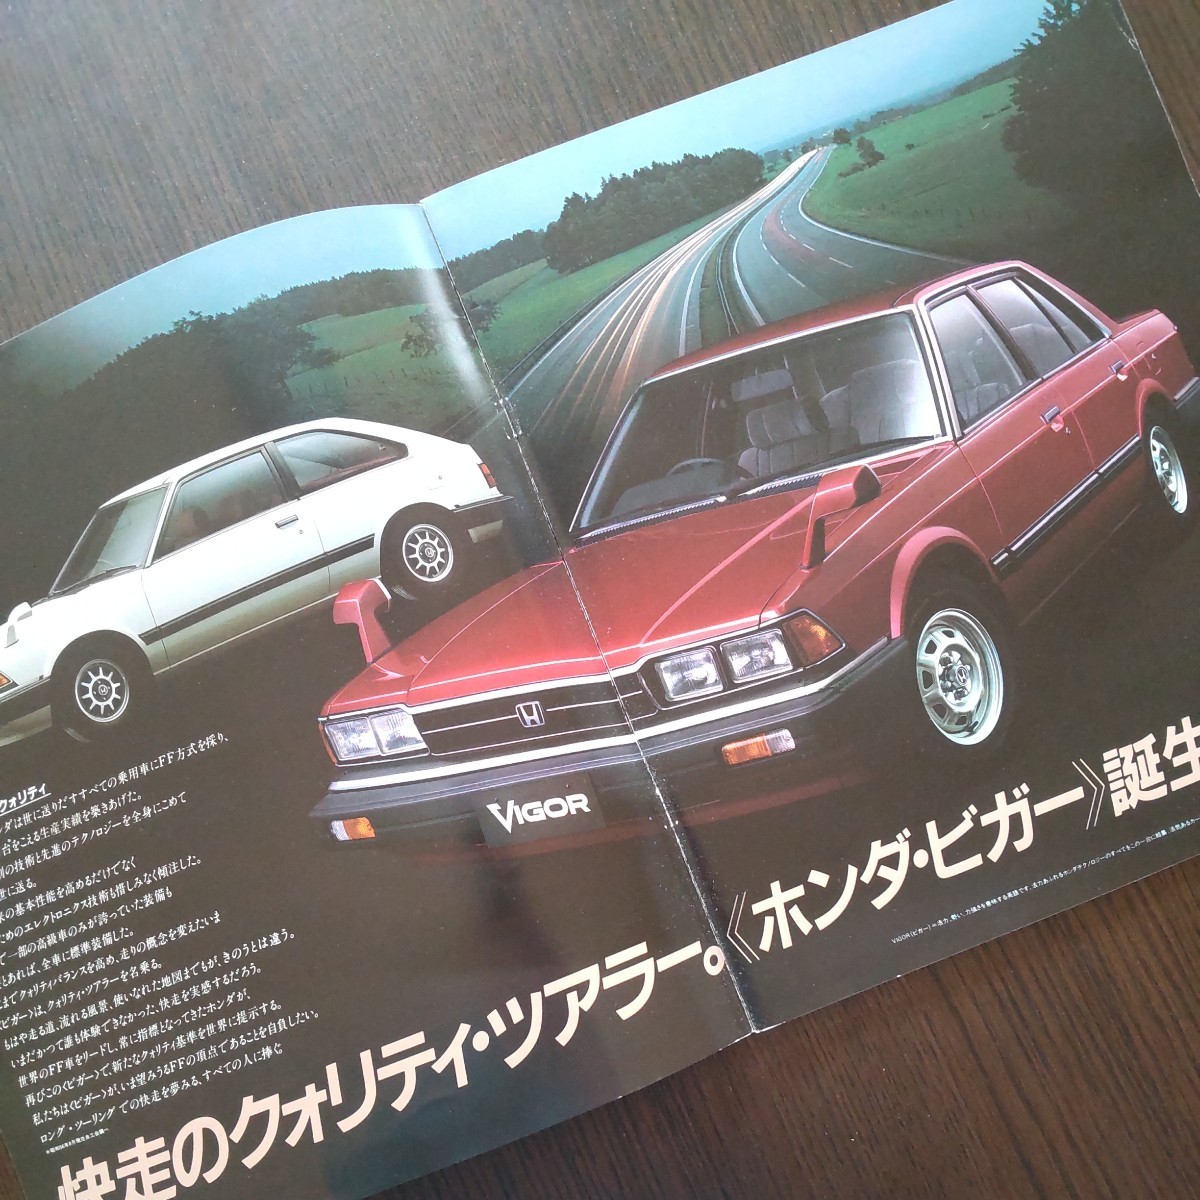  Honda Vigor каталог 1981 год Showa 56 год старый машина HONDA VIGOR